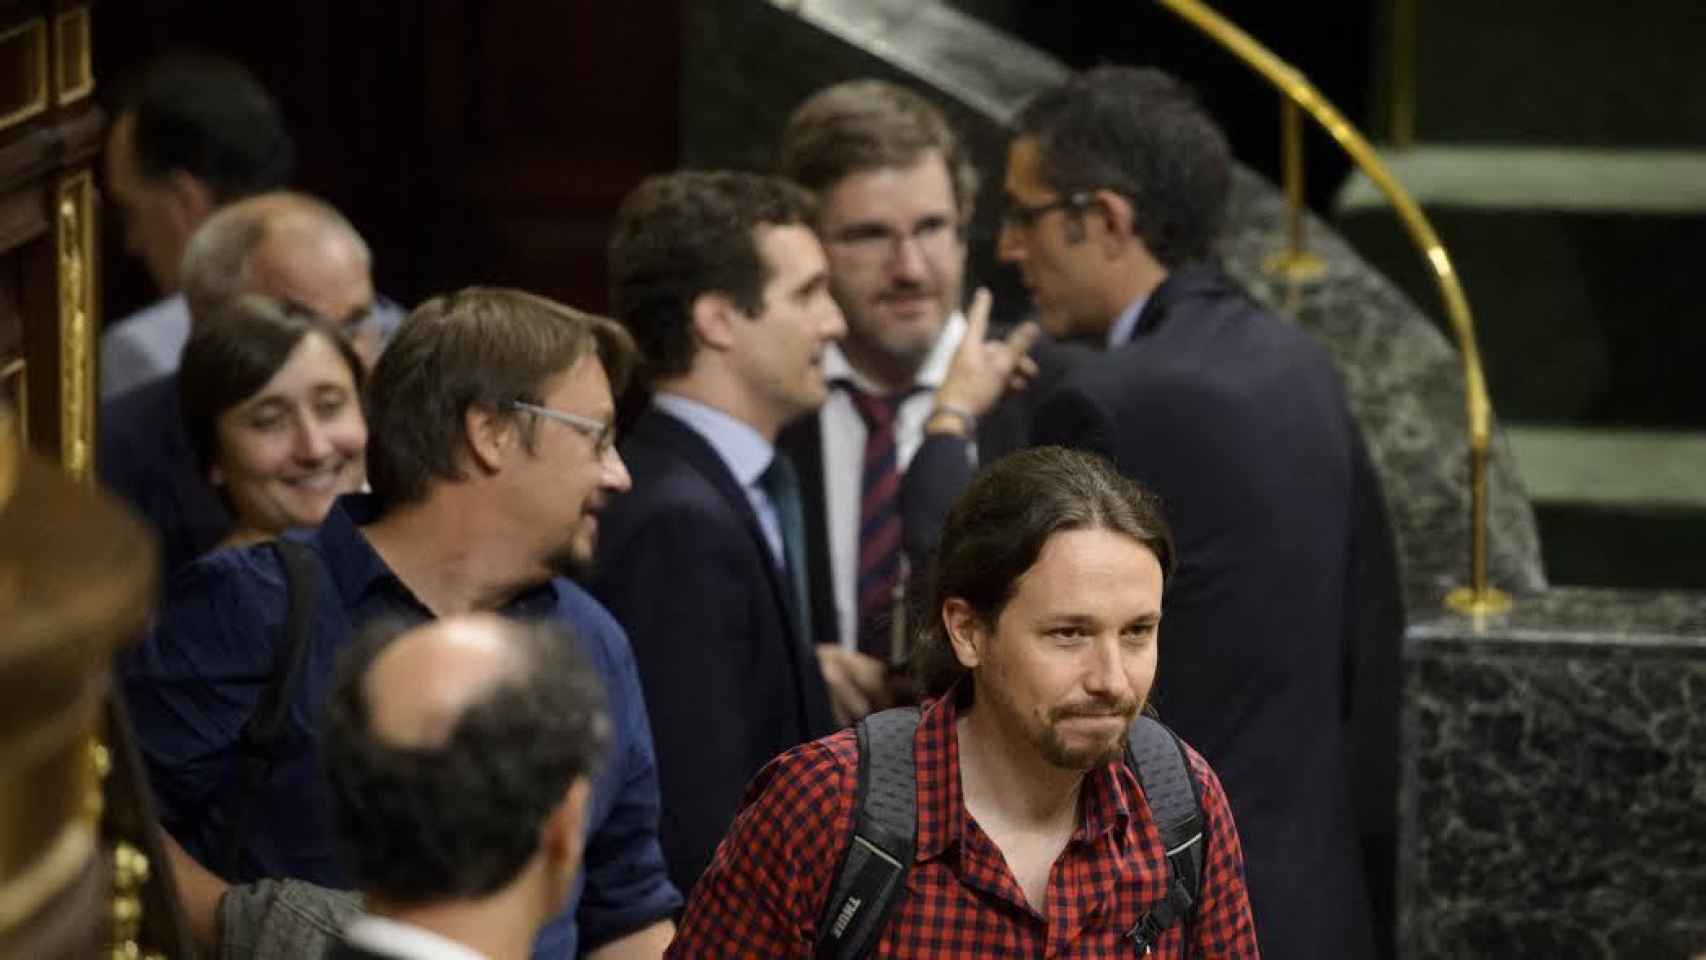 Pablo_Iglesias-Podemos-Unidos_Podemos-Congreso_de_los_Diputados-Politica_160497123_18123269_1706x960.jpg